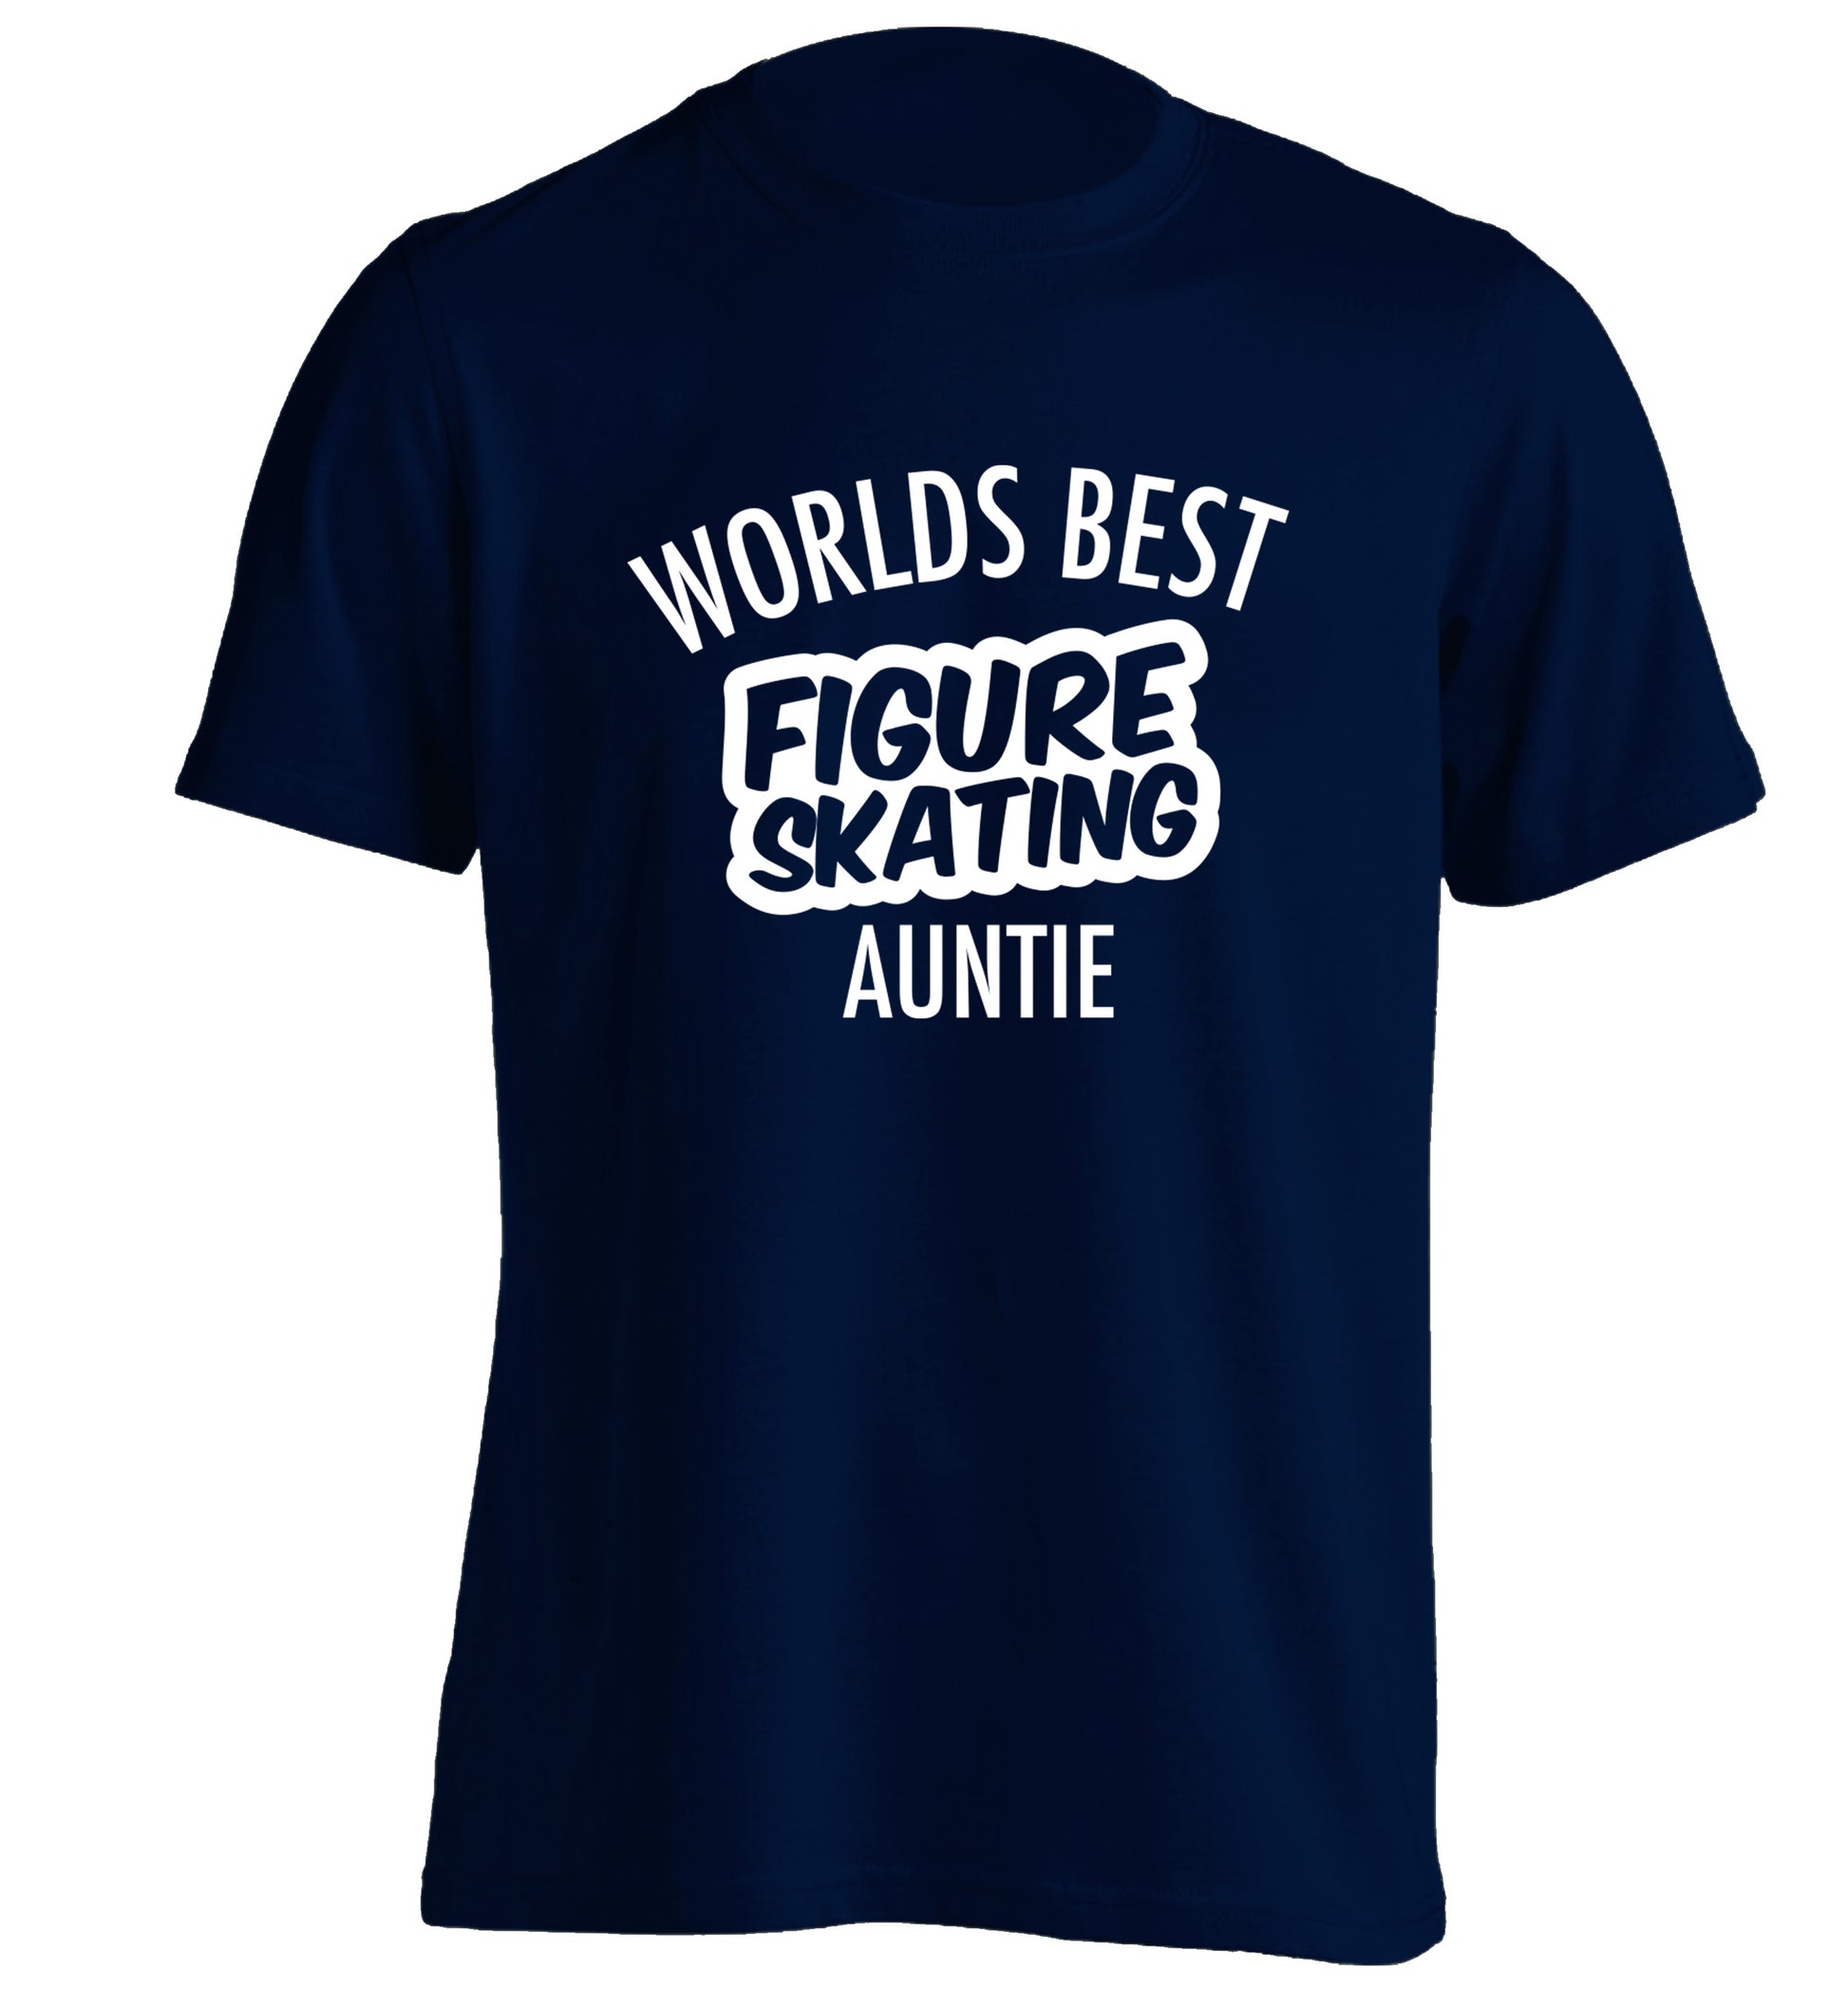 Worlds best figure skating auntie adults unisexnavy Tshirt 2XL